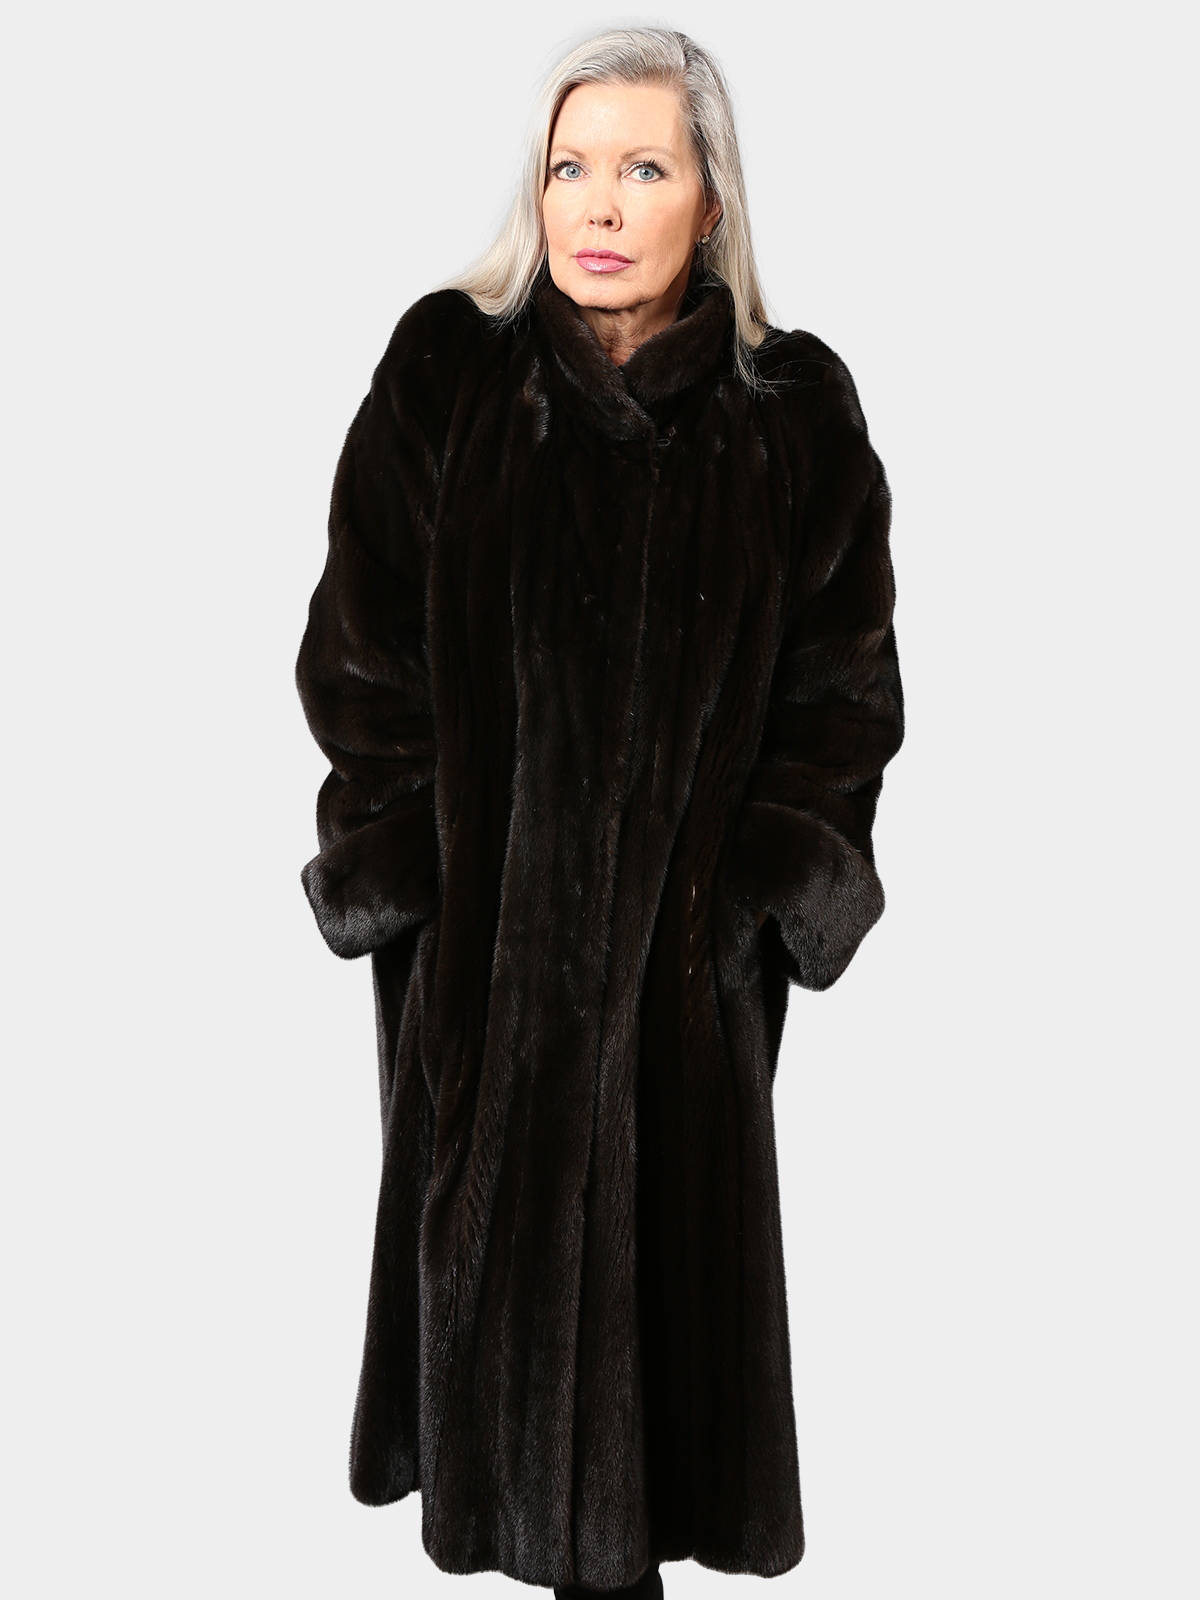 Ranch Female Mink Fur Coat - Woman's Fur Coat - Estate Furs